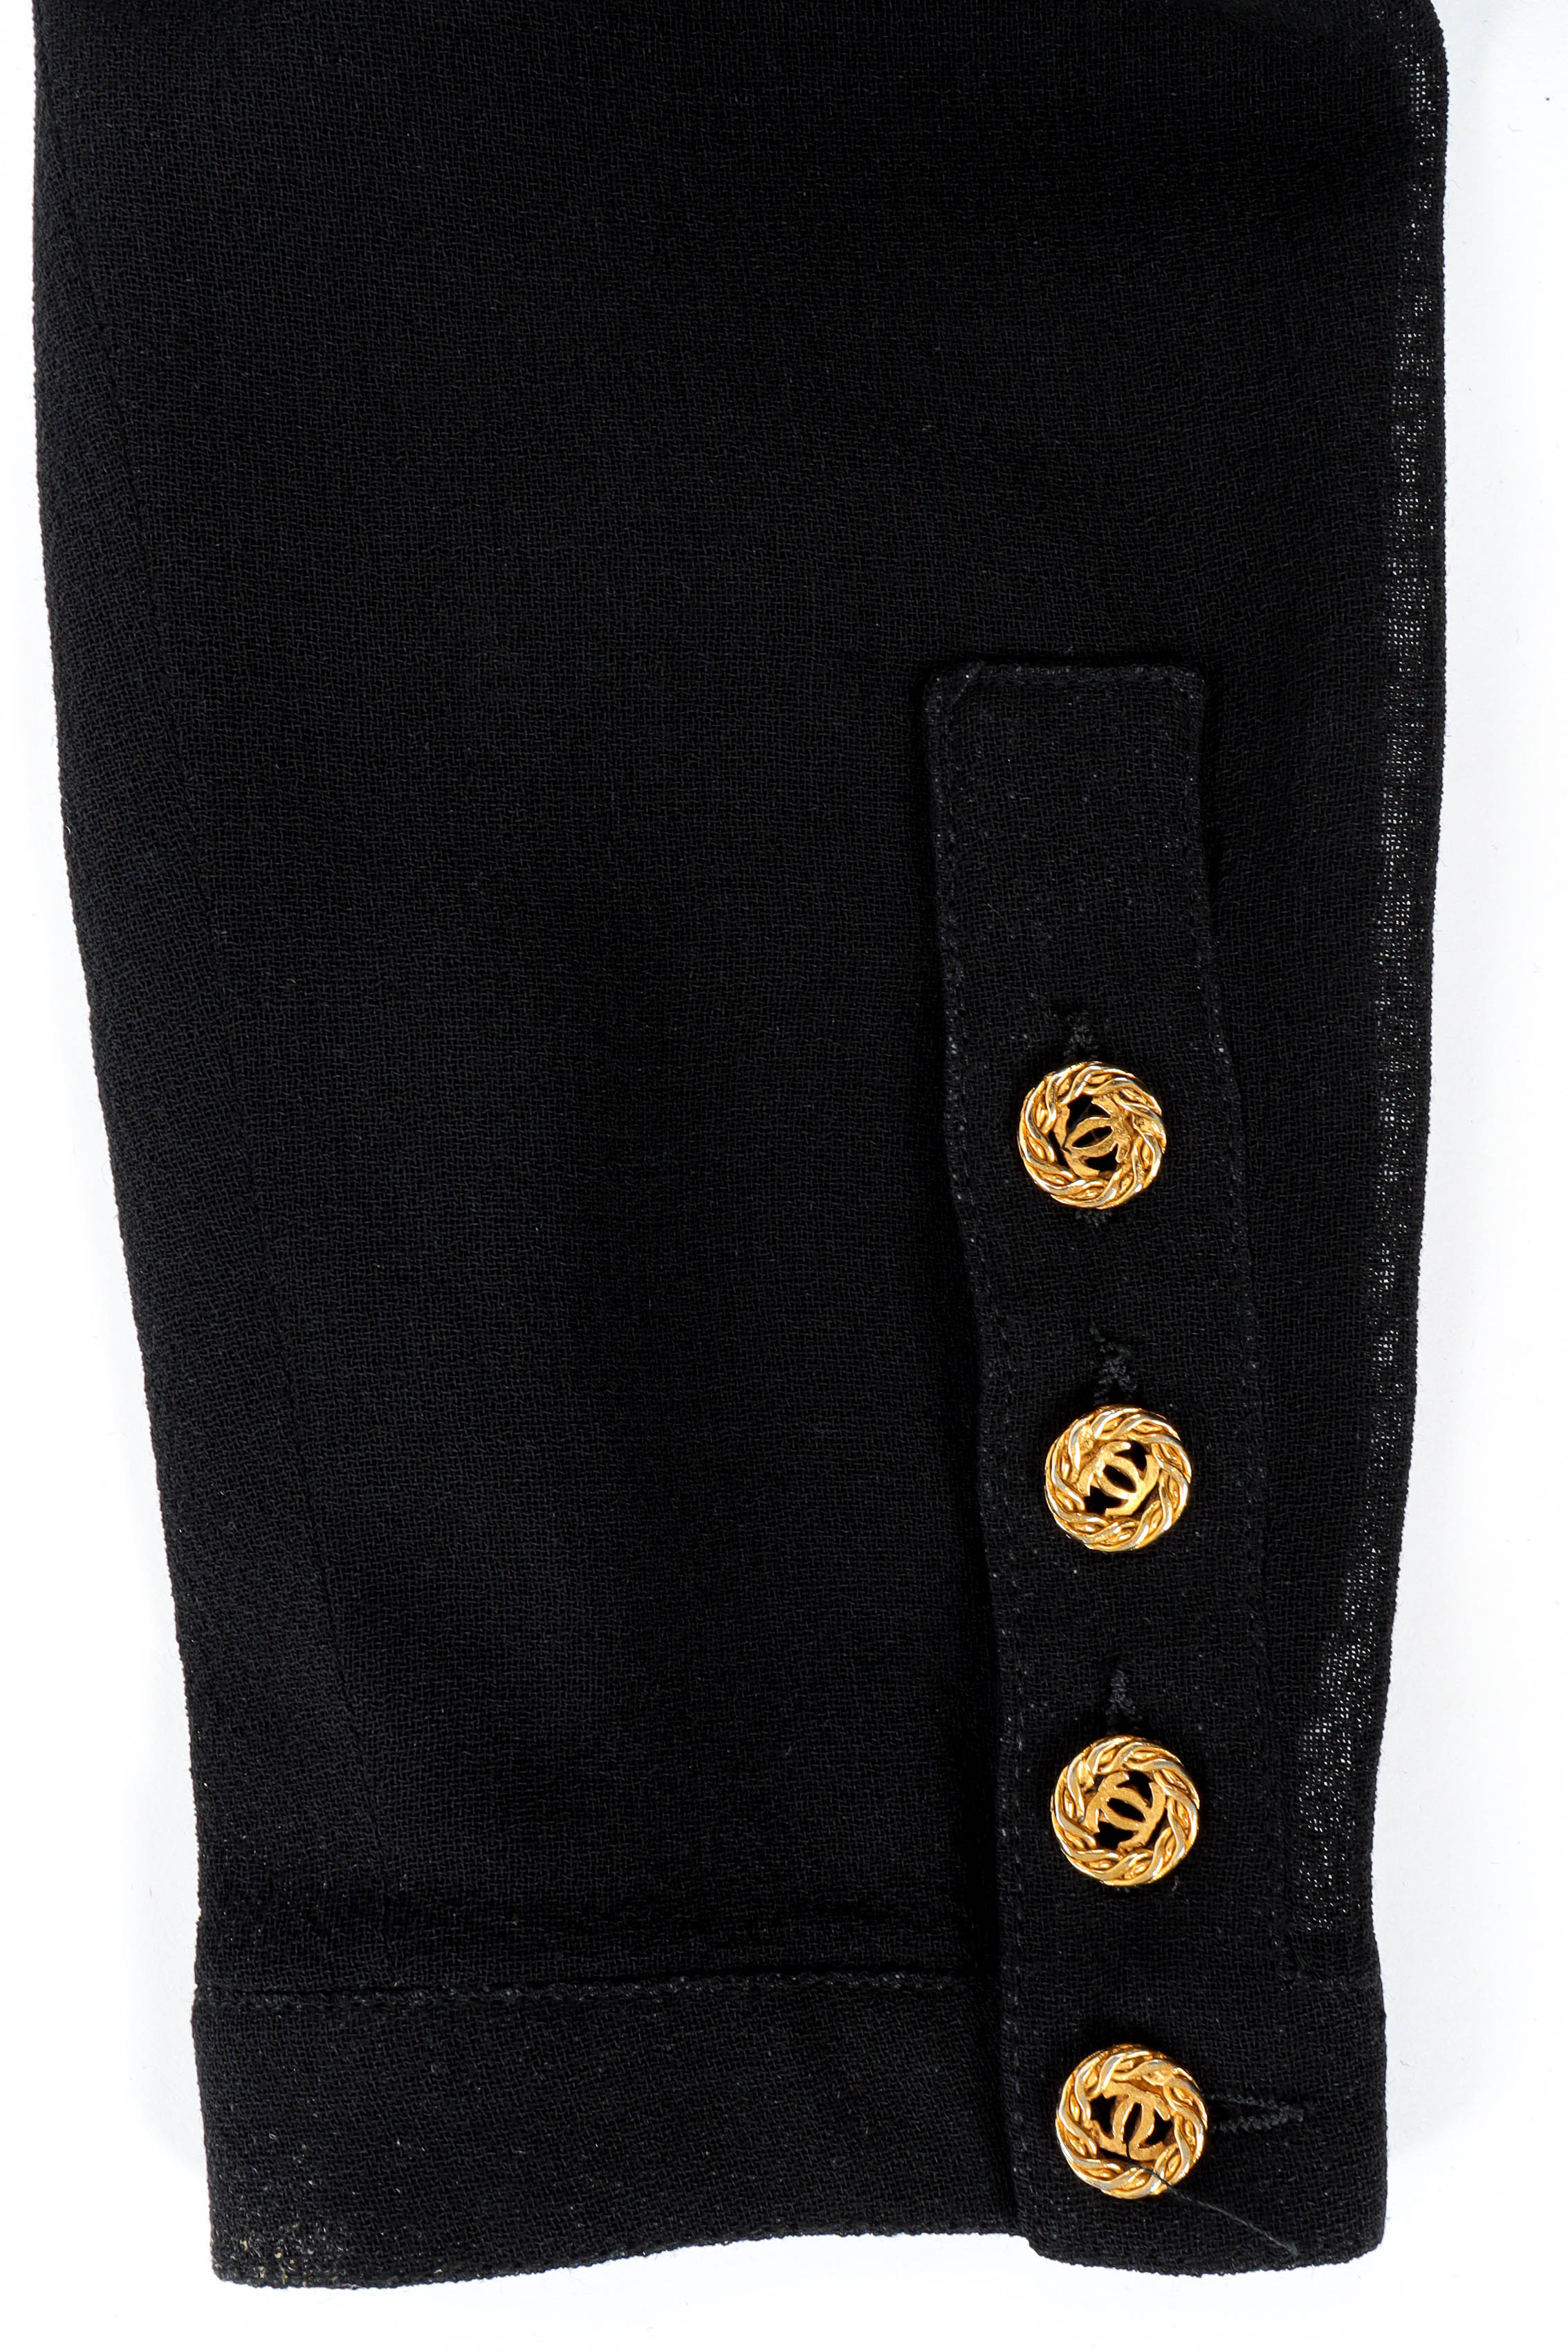 Vintage Chanel CC Pleated Wrap Dress sleeve buttons @ Recess LA